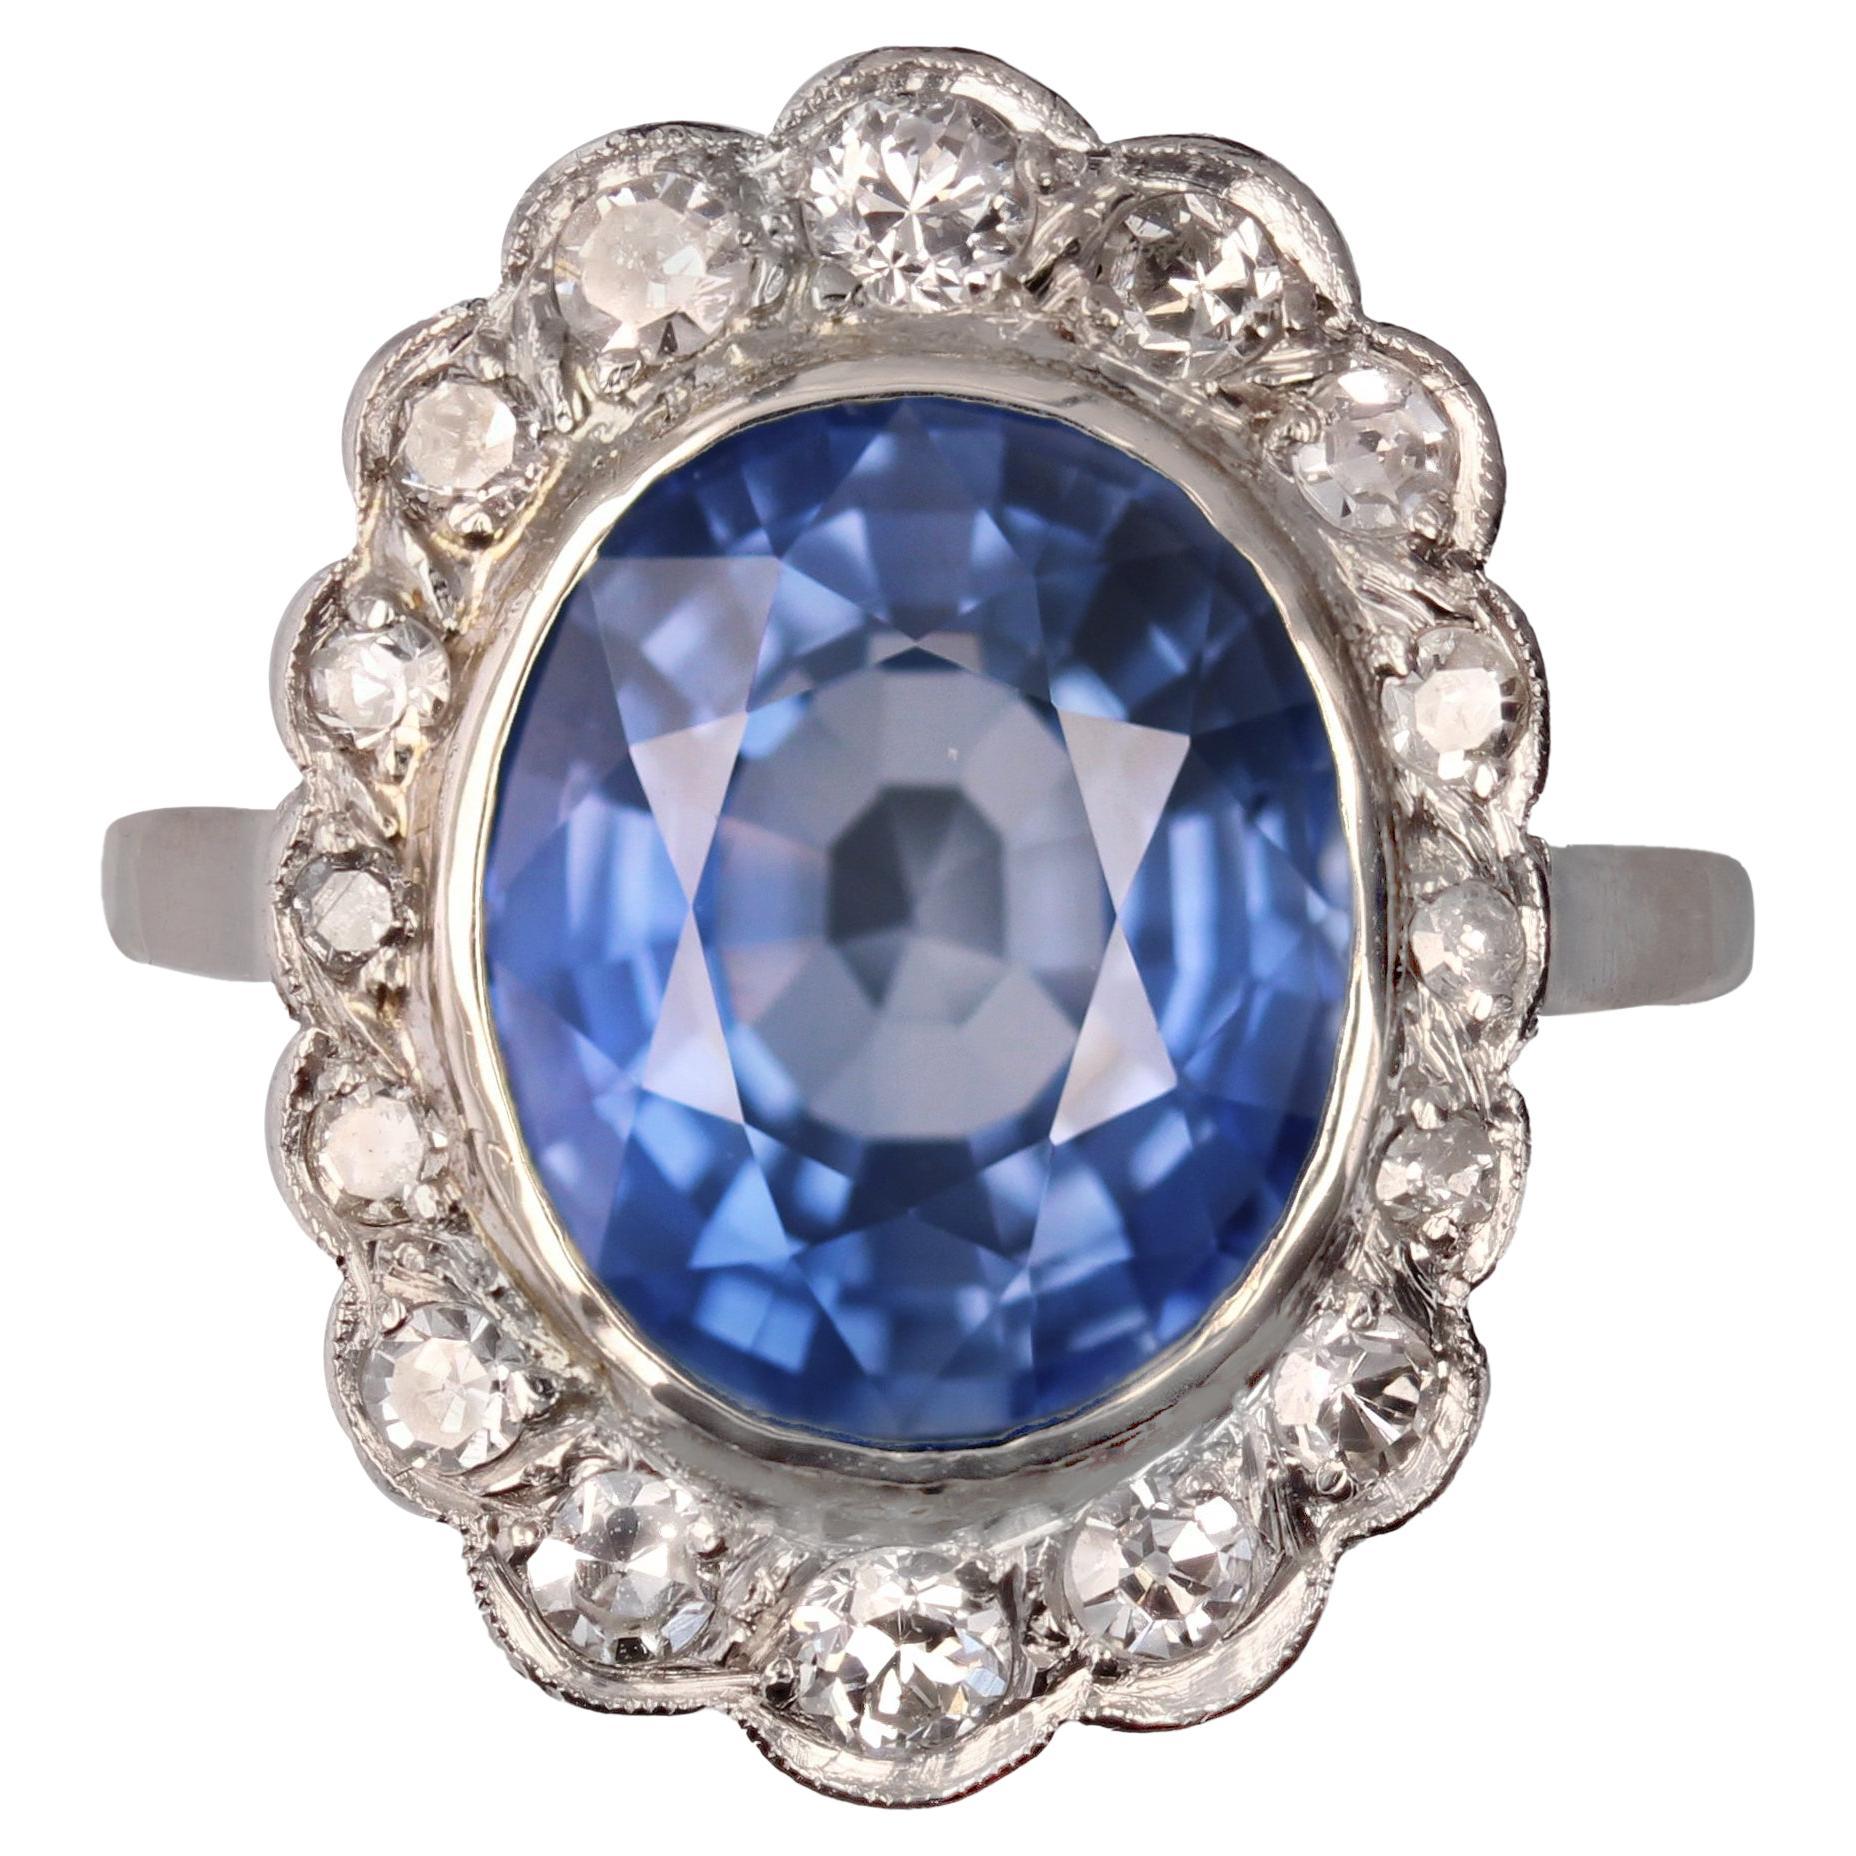 1930s Art Deco 5.80 Carat Sapphire Diamonds Platinum 18 Karat White Gold Ring